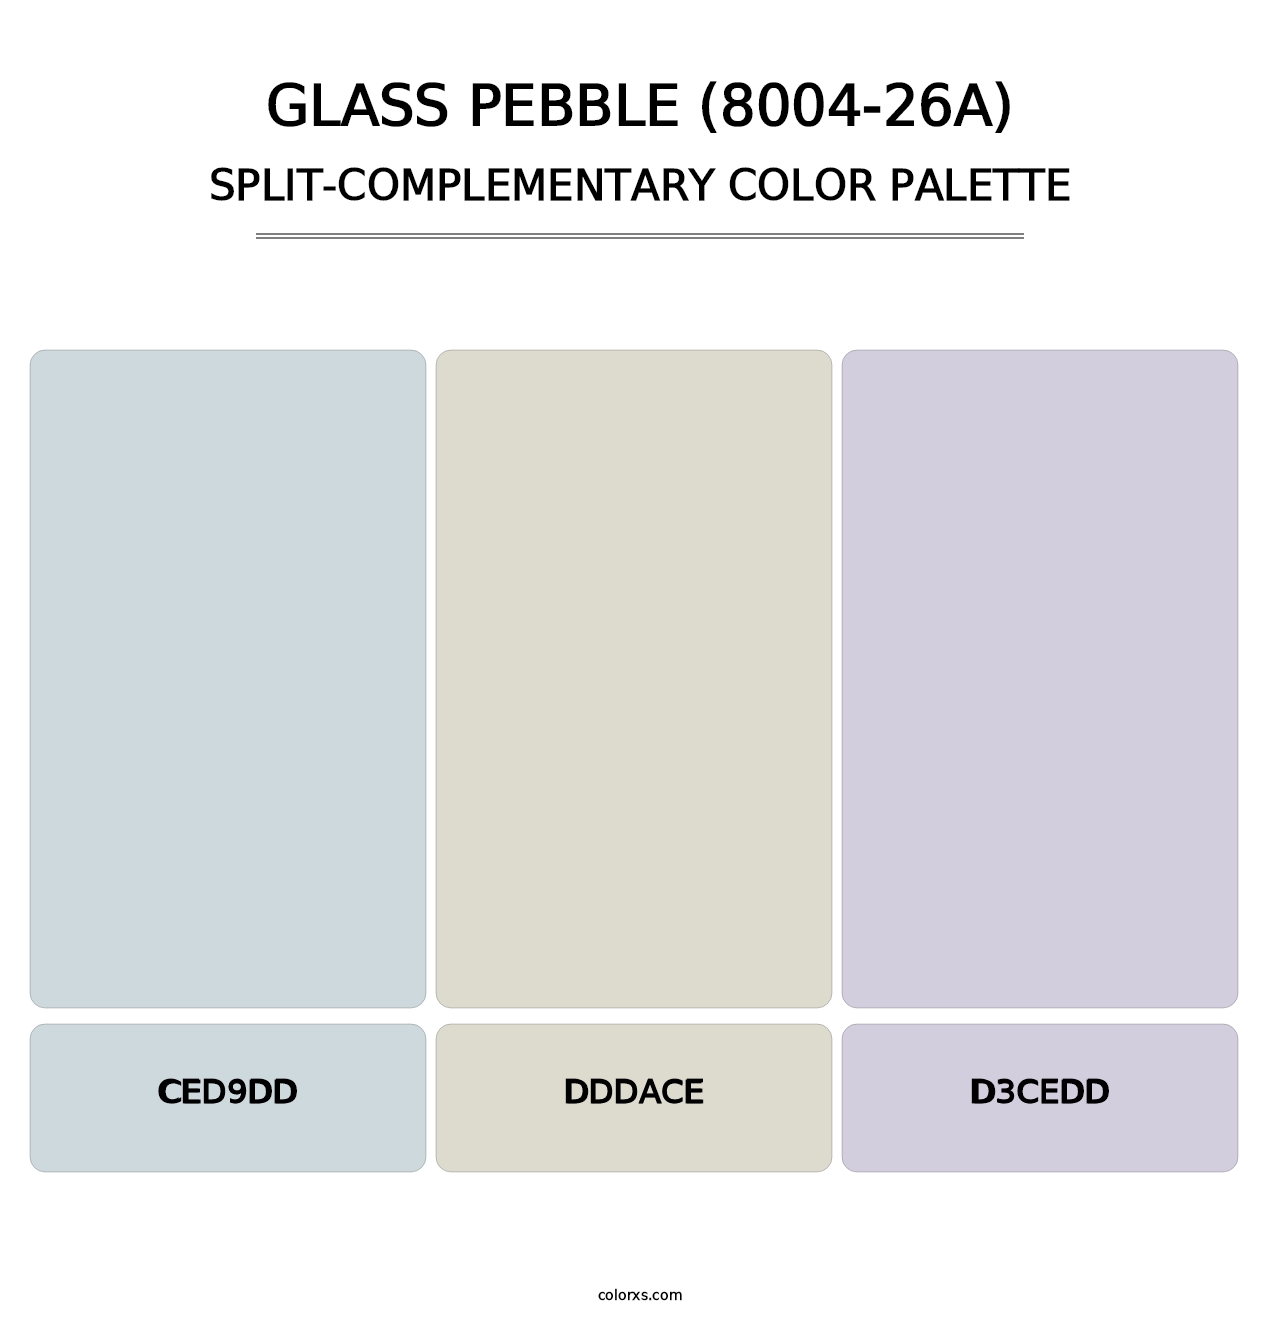 Glass Pebble (8004-26A) - Split-Complementary Color Palette